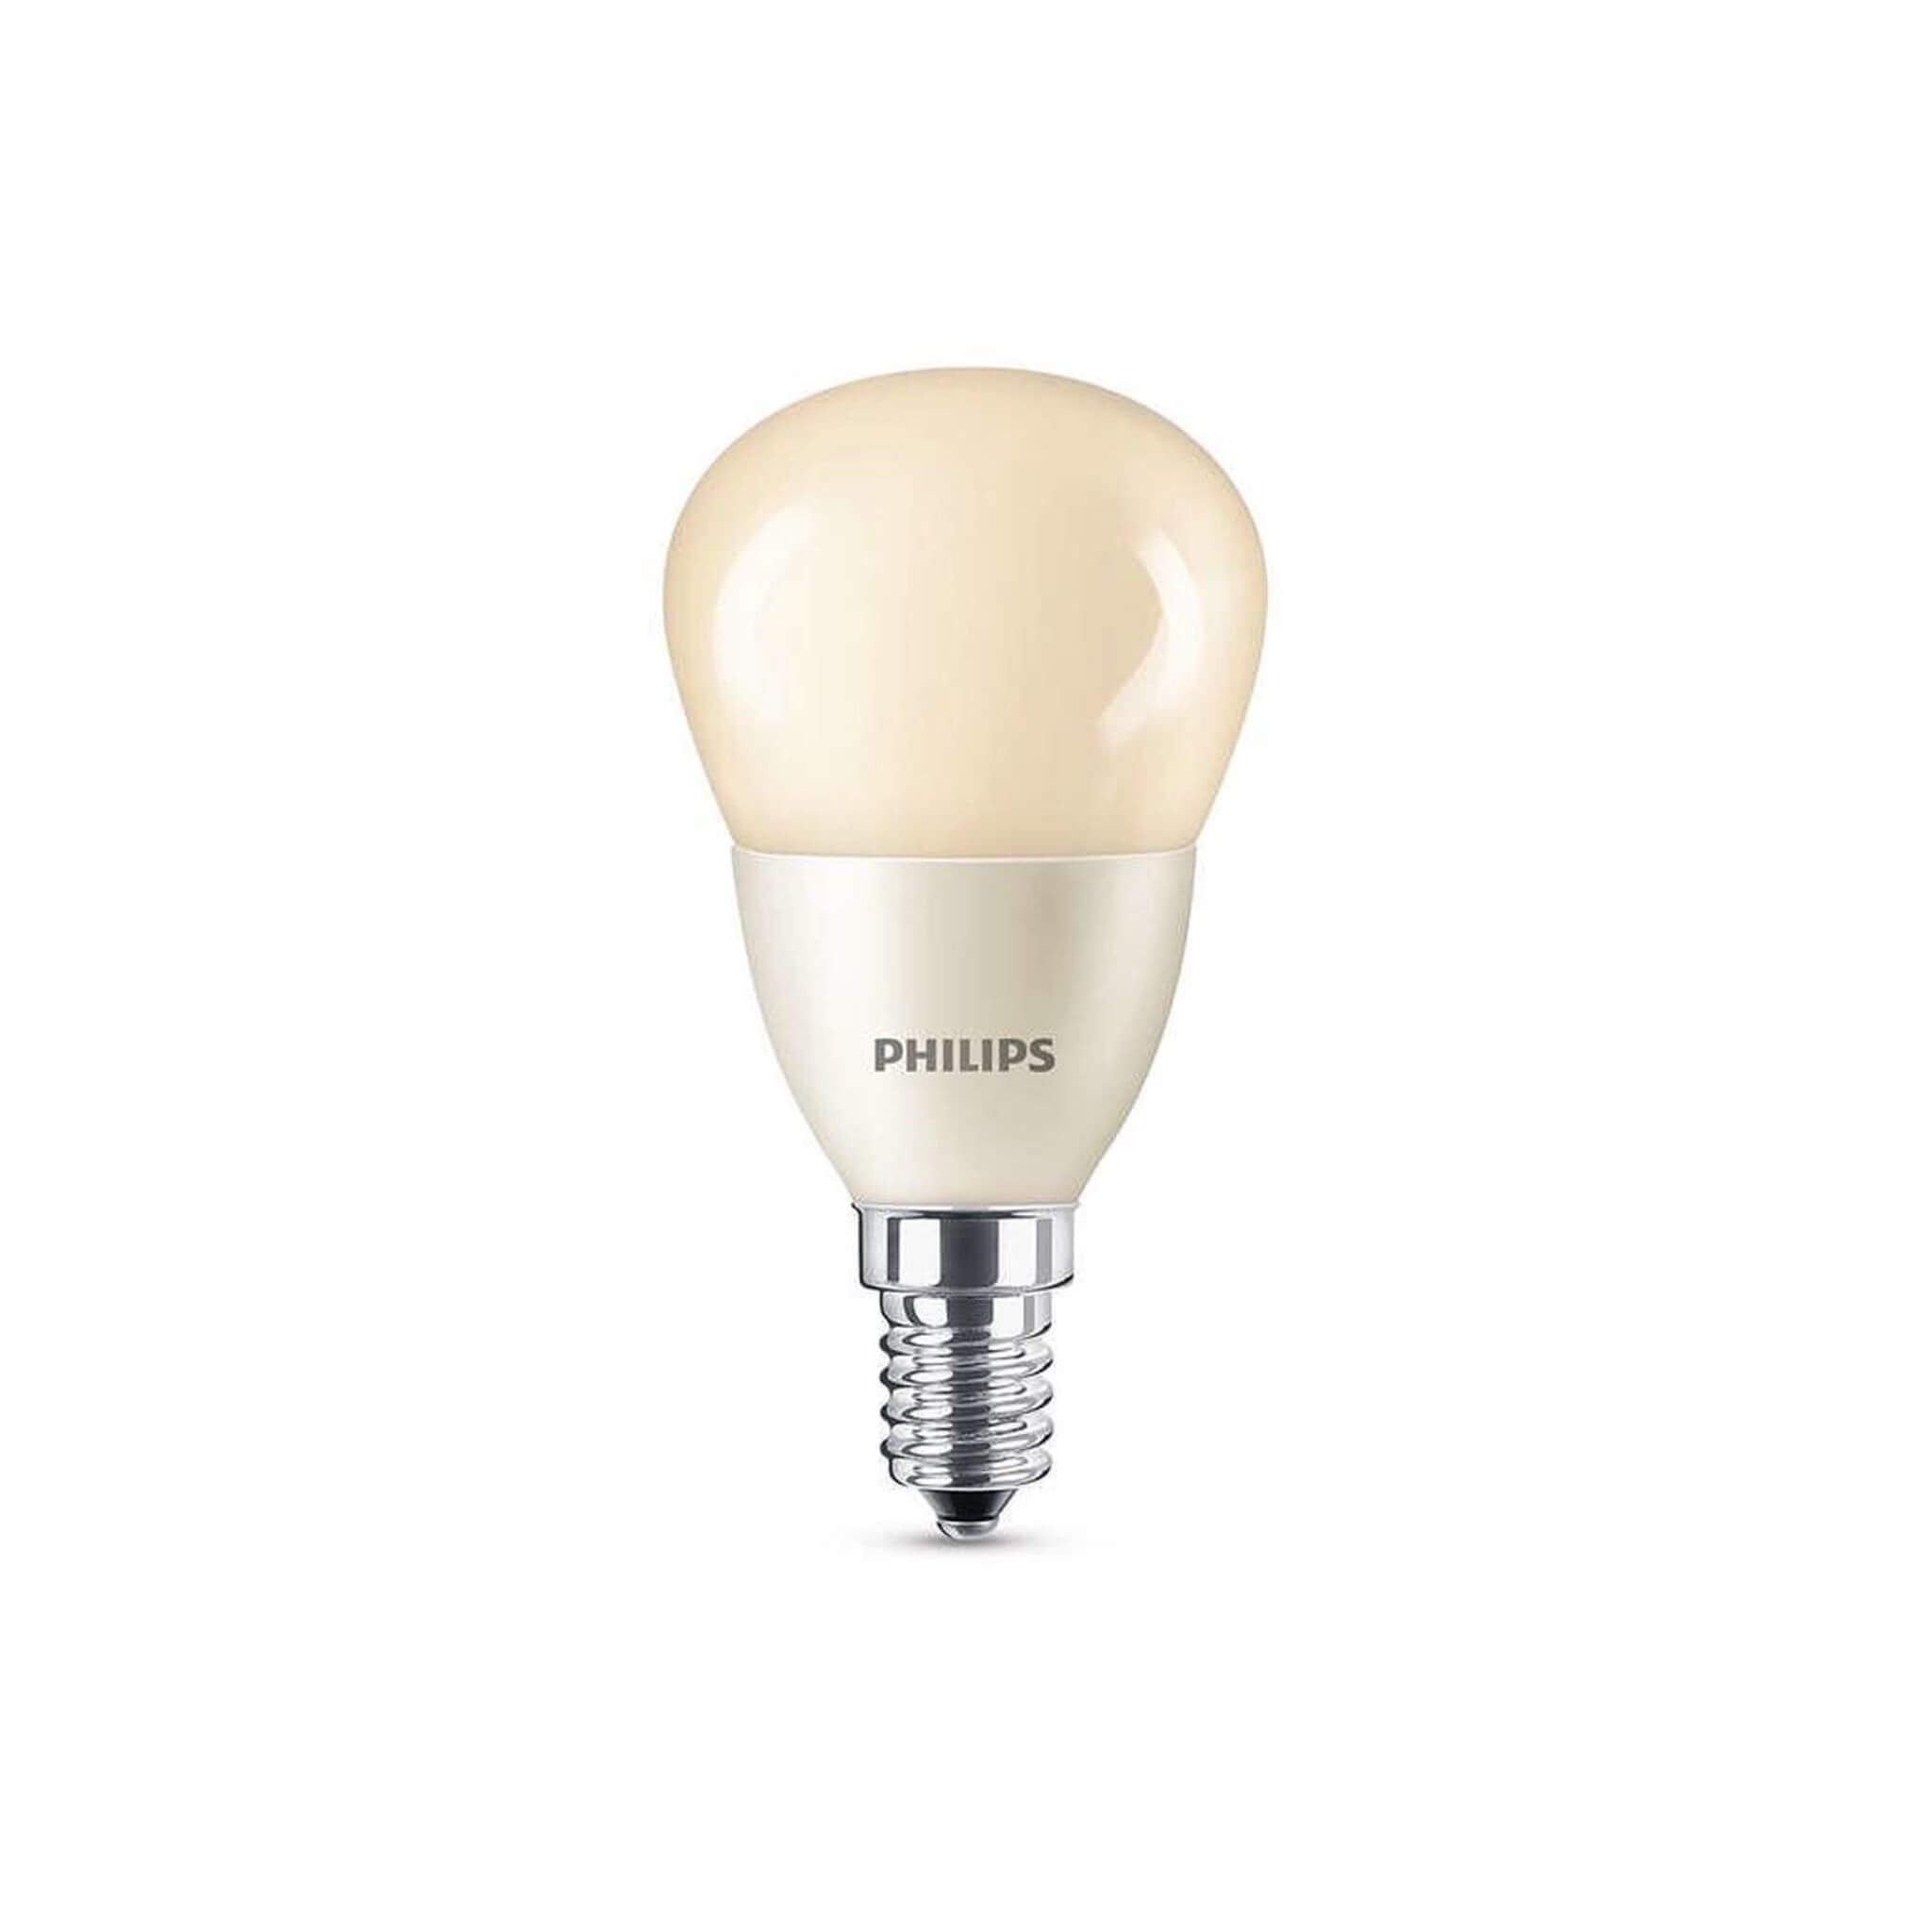 veer Aardbei overtuigen Philips LED Lamp Flame - E14 fitting - Dimbaar warm wit licht - 4W (15 – LED .nl